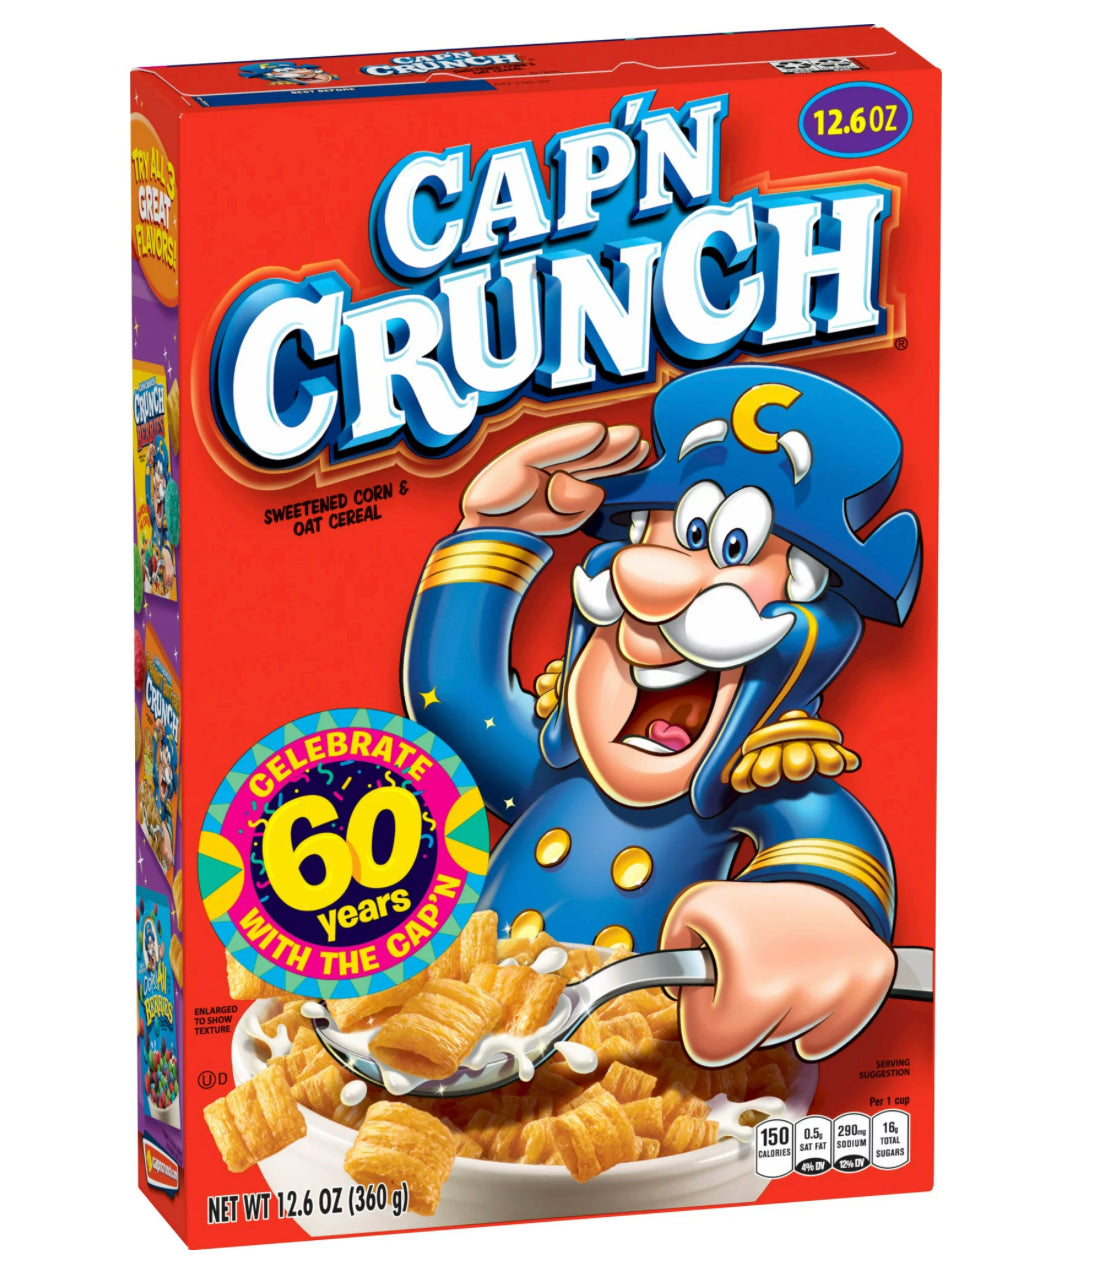 Cap'n Crunch Sweetened Corn & Oat Cereal 12.6oz